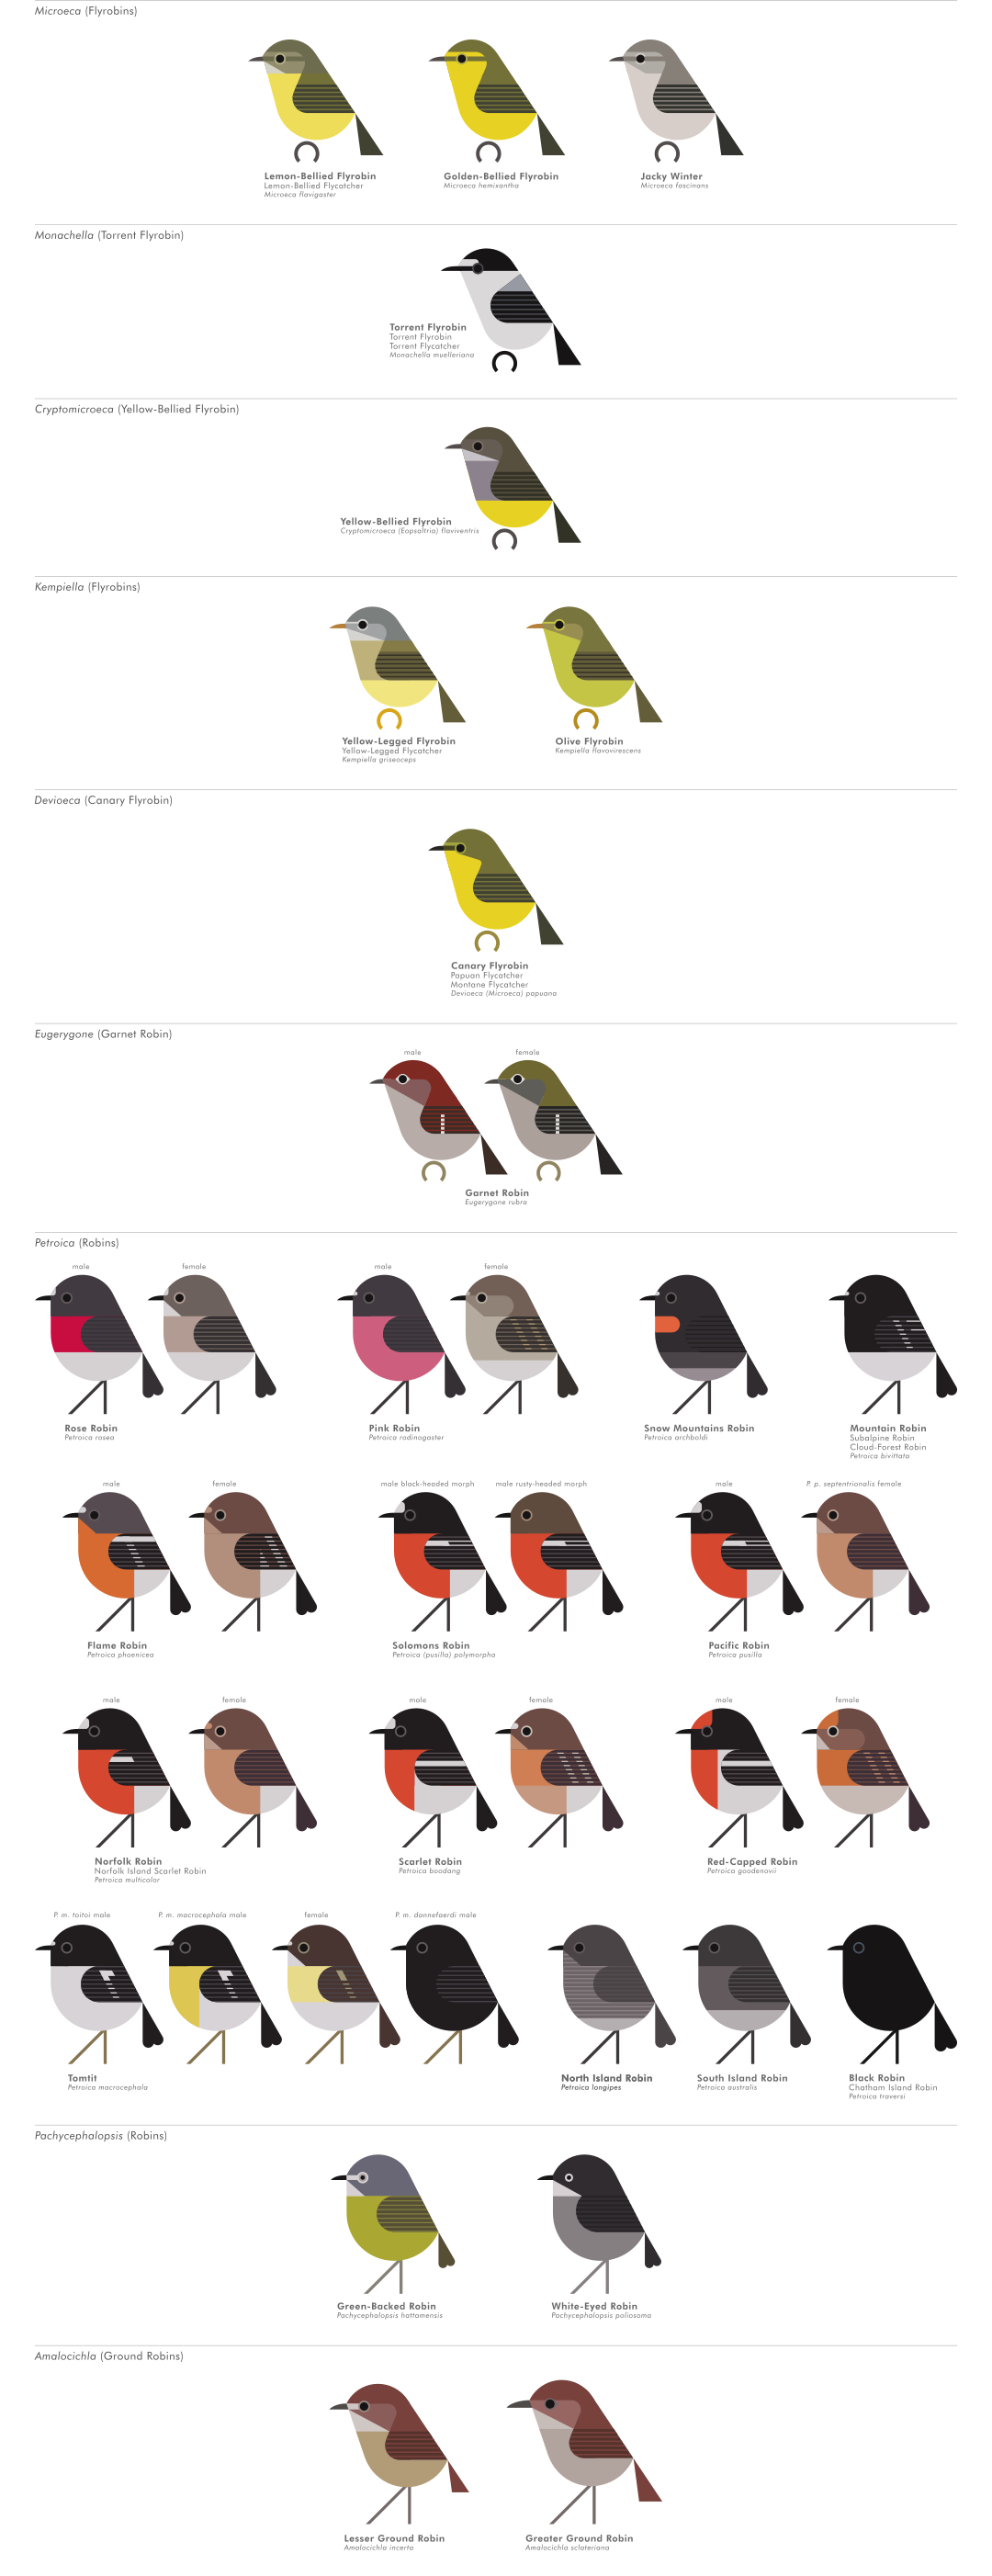 scott partridge - AVE - avian vector encyclopedia - robins - bird vector art